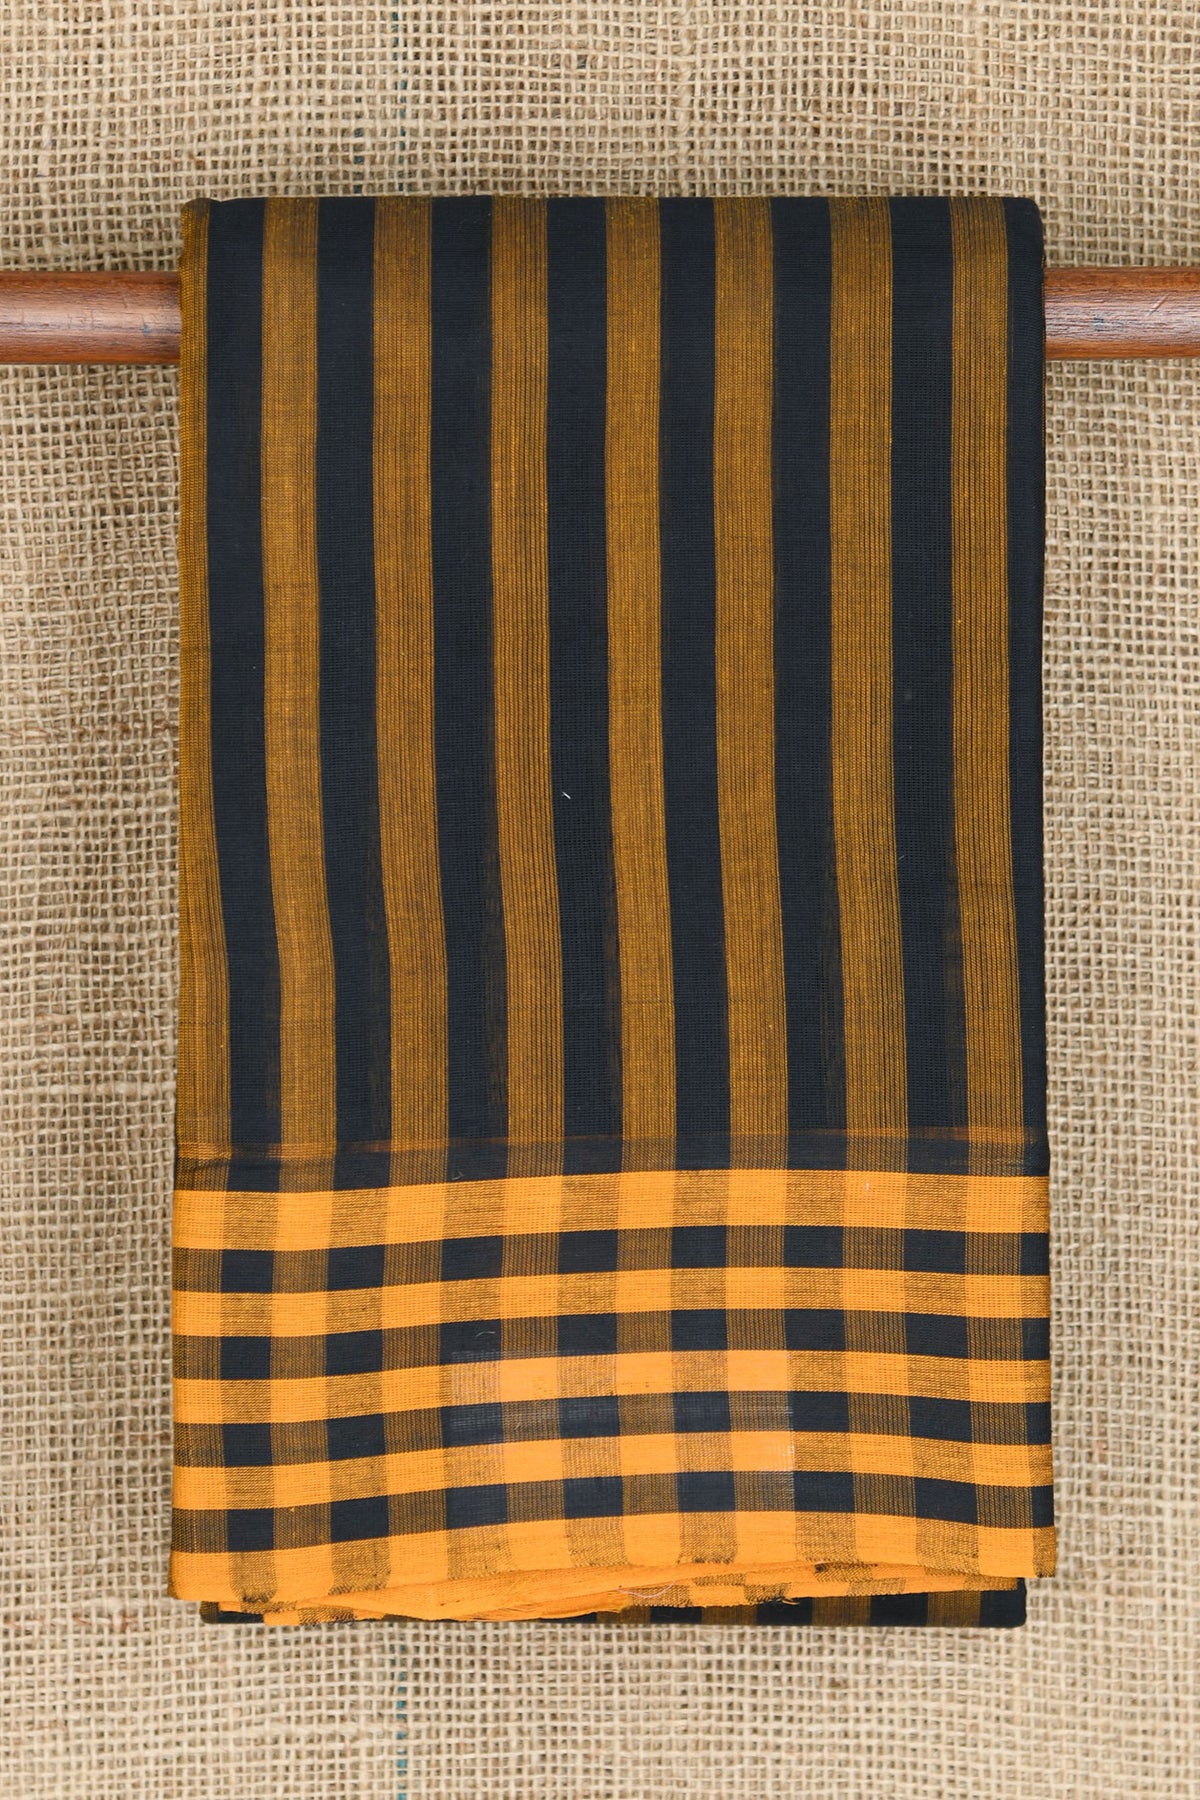 Black And Mustard Stripes Kanchi Cotton Saree